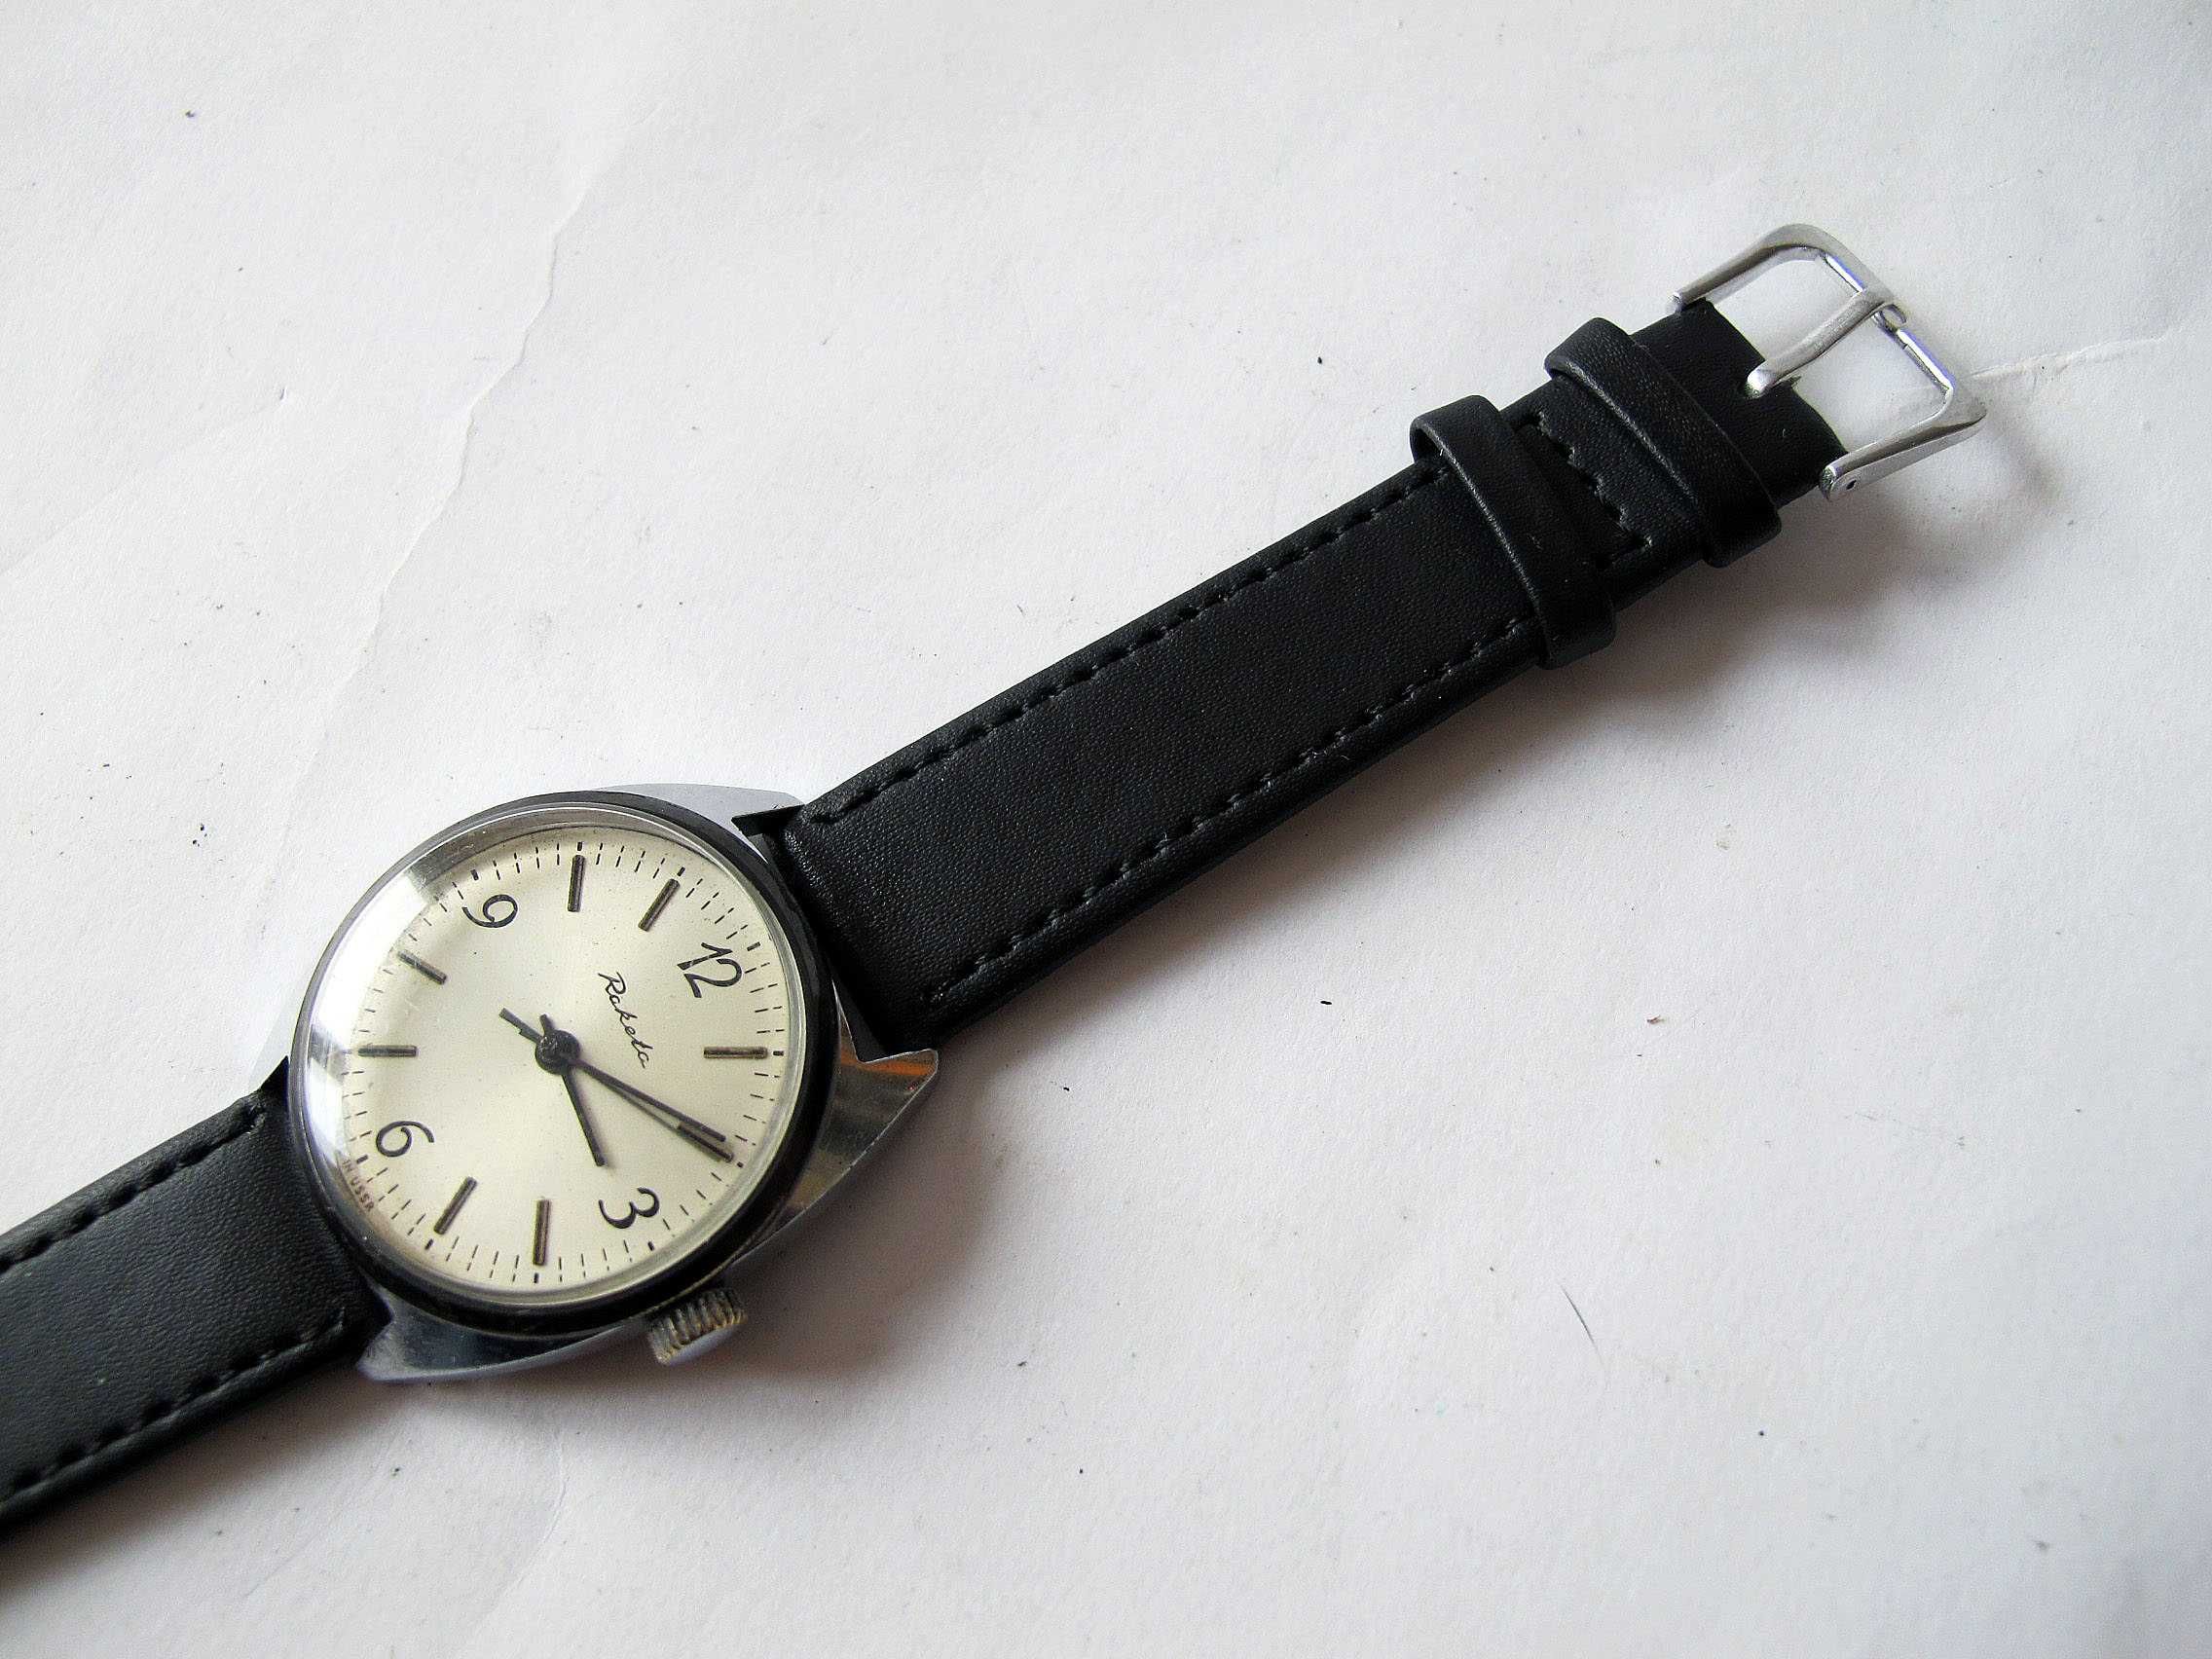 Zegarek Rakieta z lat 80 tych.